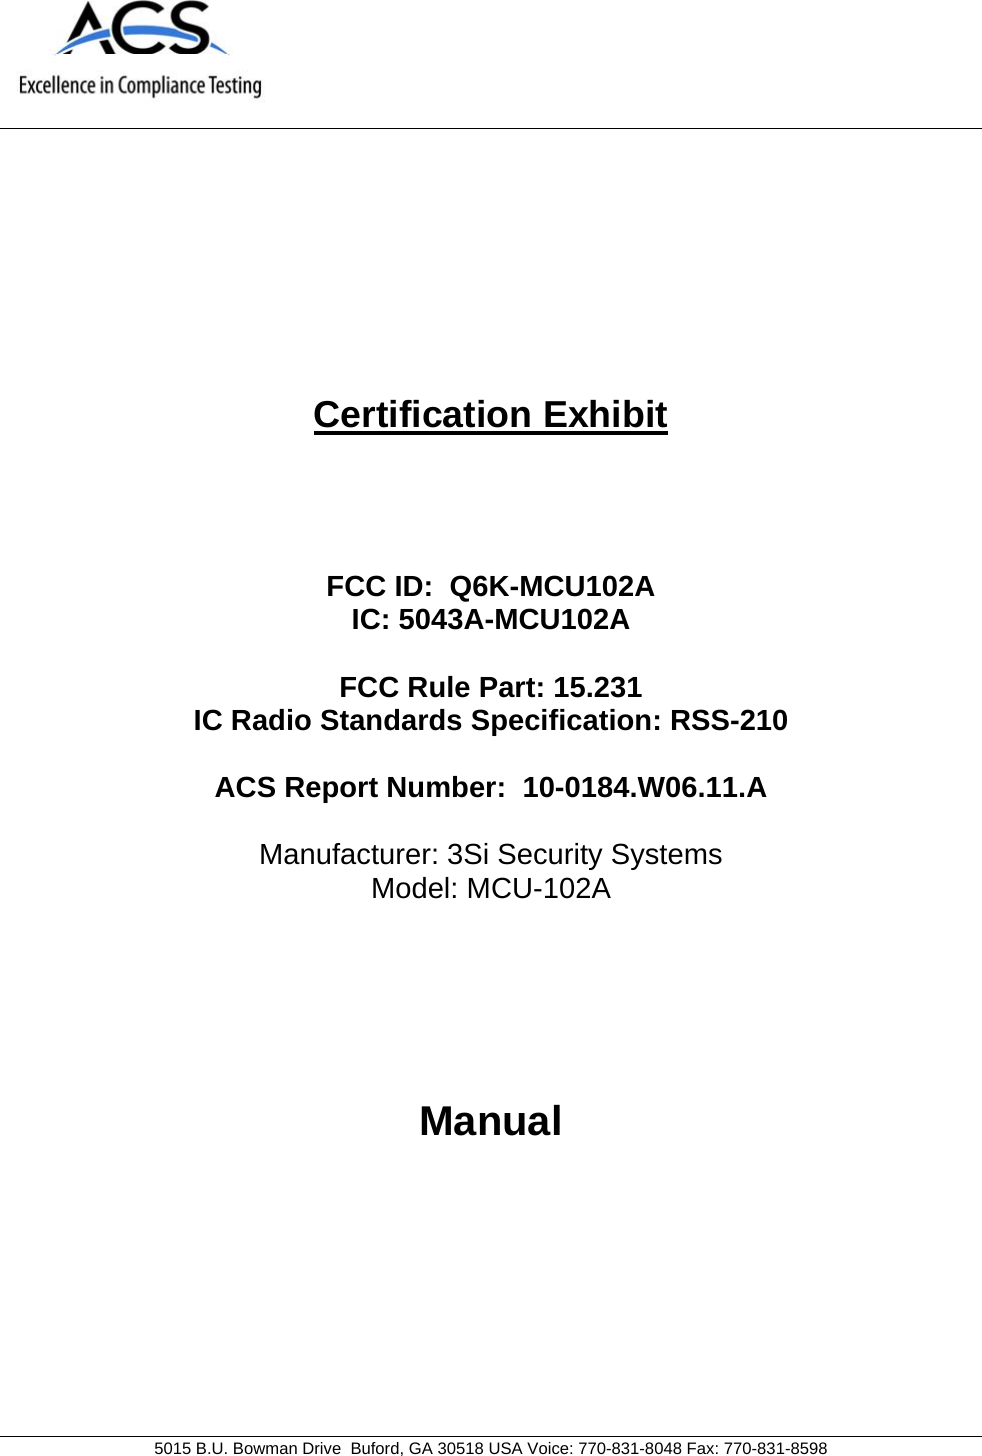     5015 B.U. Bowman Drive  Buford, GA 30518 USA Voice: 770-831-8048 Fax: 770-831-8598   Certification Exhibit     FCC ID:  Q6K-MCU102A IC: 5043A-MCU102A  FCC Rule Part: 15.231 IC Radio Standards Specification: RSS-210  ACS Report Number:  10-0184.W06.11.A   Manufacturer: 3Si Security Systems Model: MCU-102A     Manual  